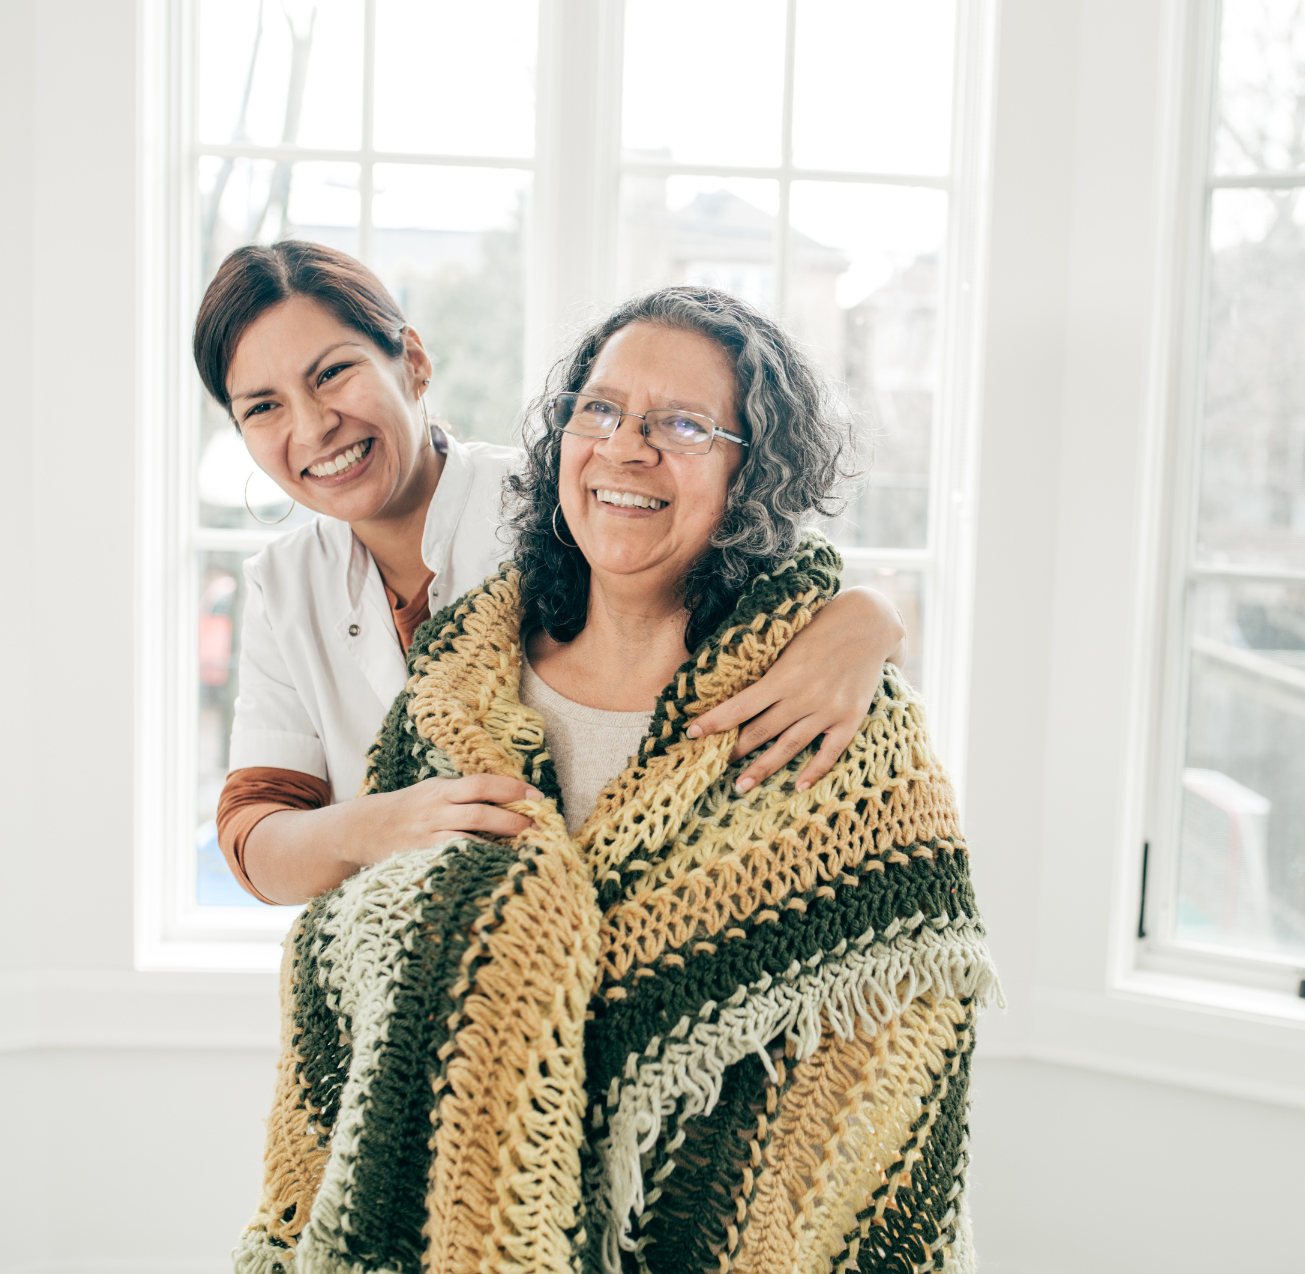 A caregiver wrapping a senior client in a blanket represents Premier Private Care in Prescott